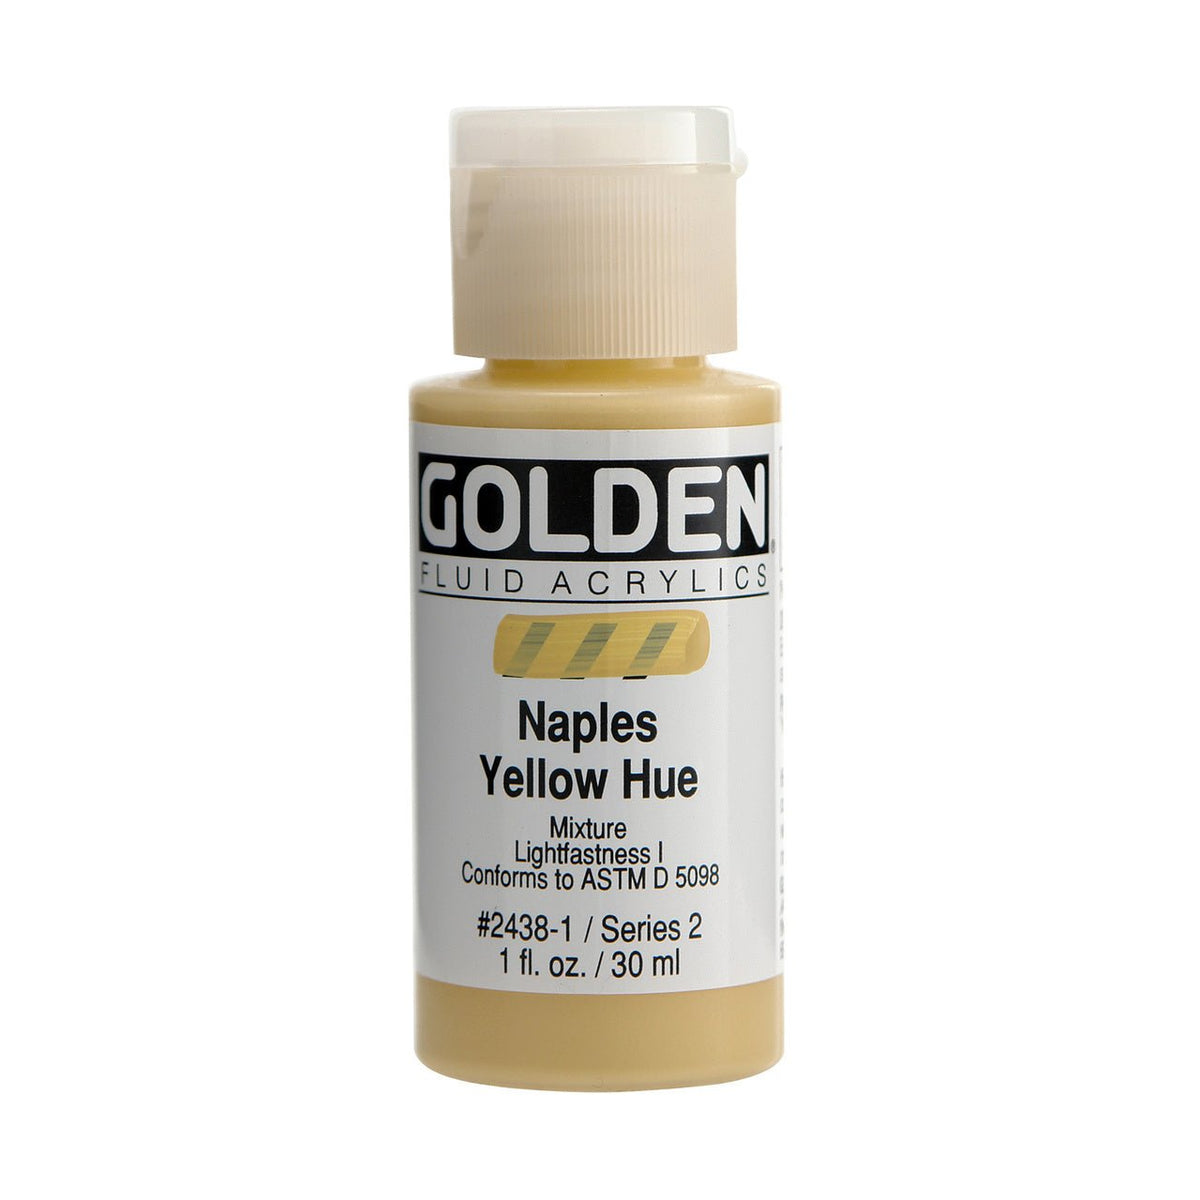 Golden Fluid Acrylic Naples Yellow Hue 1 oz - merriartist.com